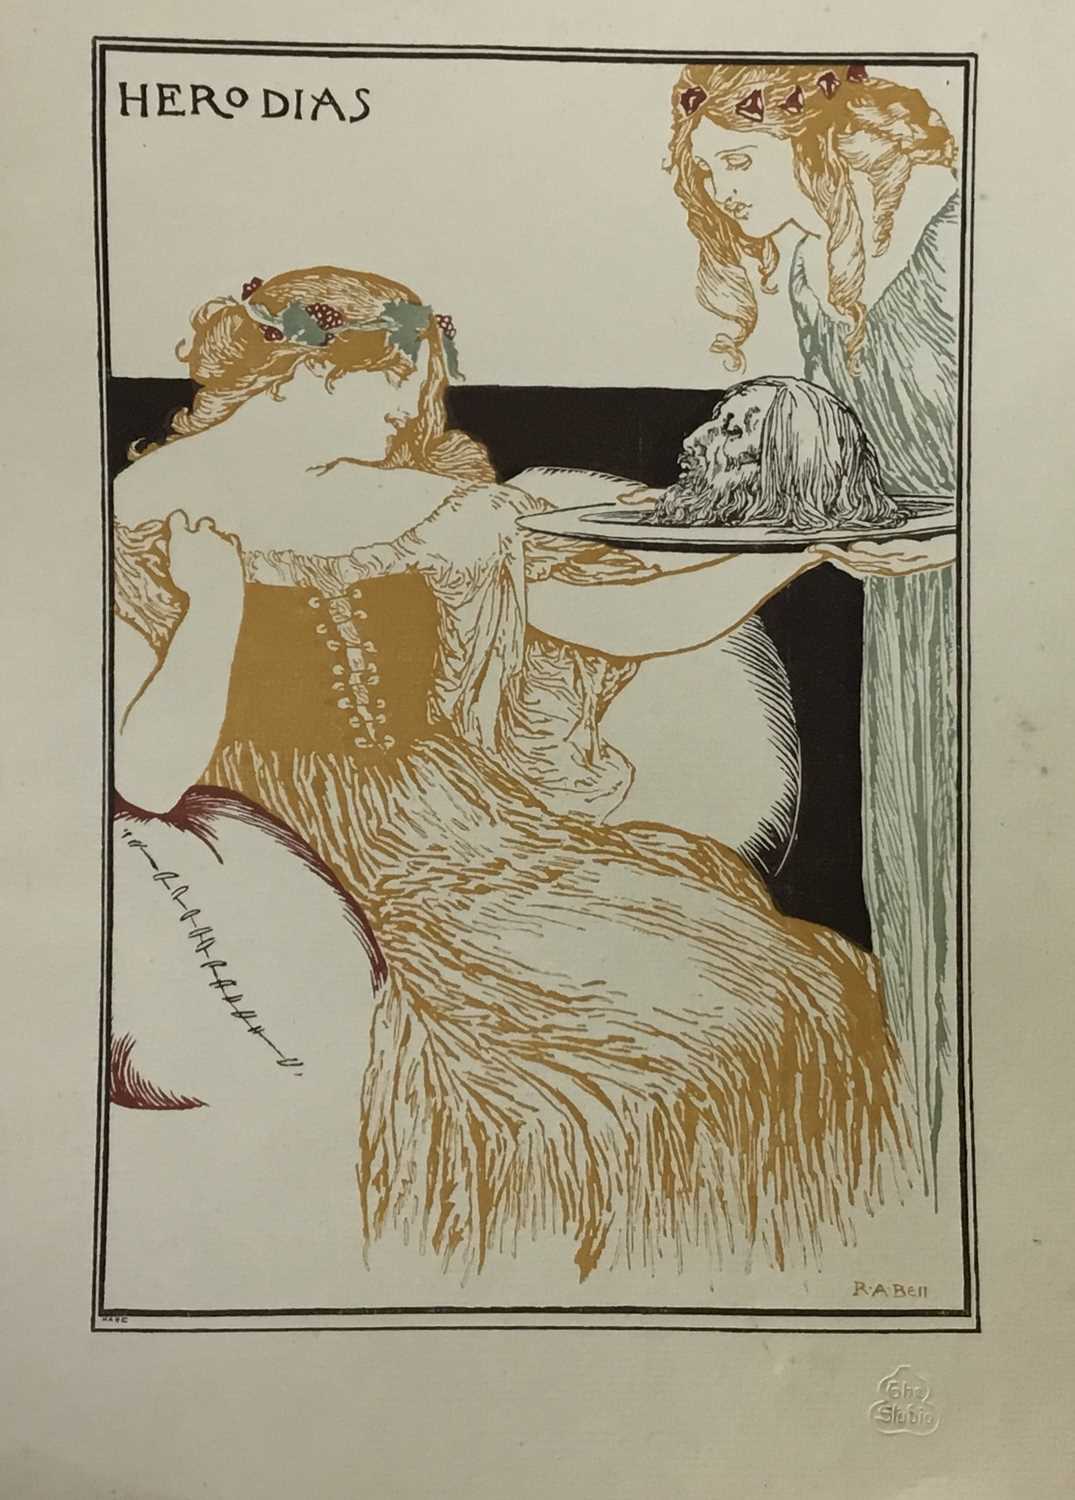 Robert Anning Bell RA, 1863-1933. Art Nouveau studio lithograph, “Hero Dias”. Embossed studio mark “